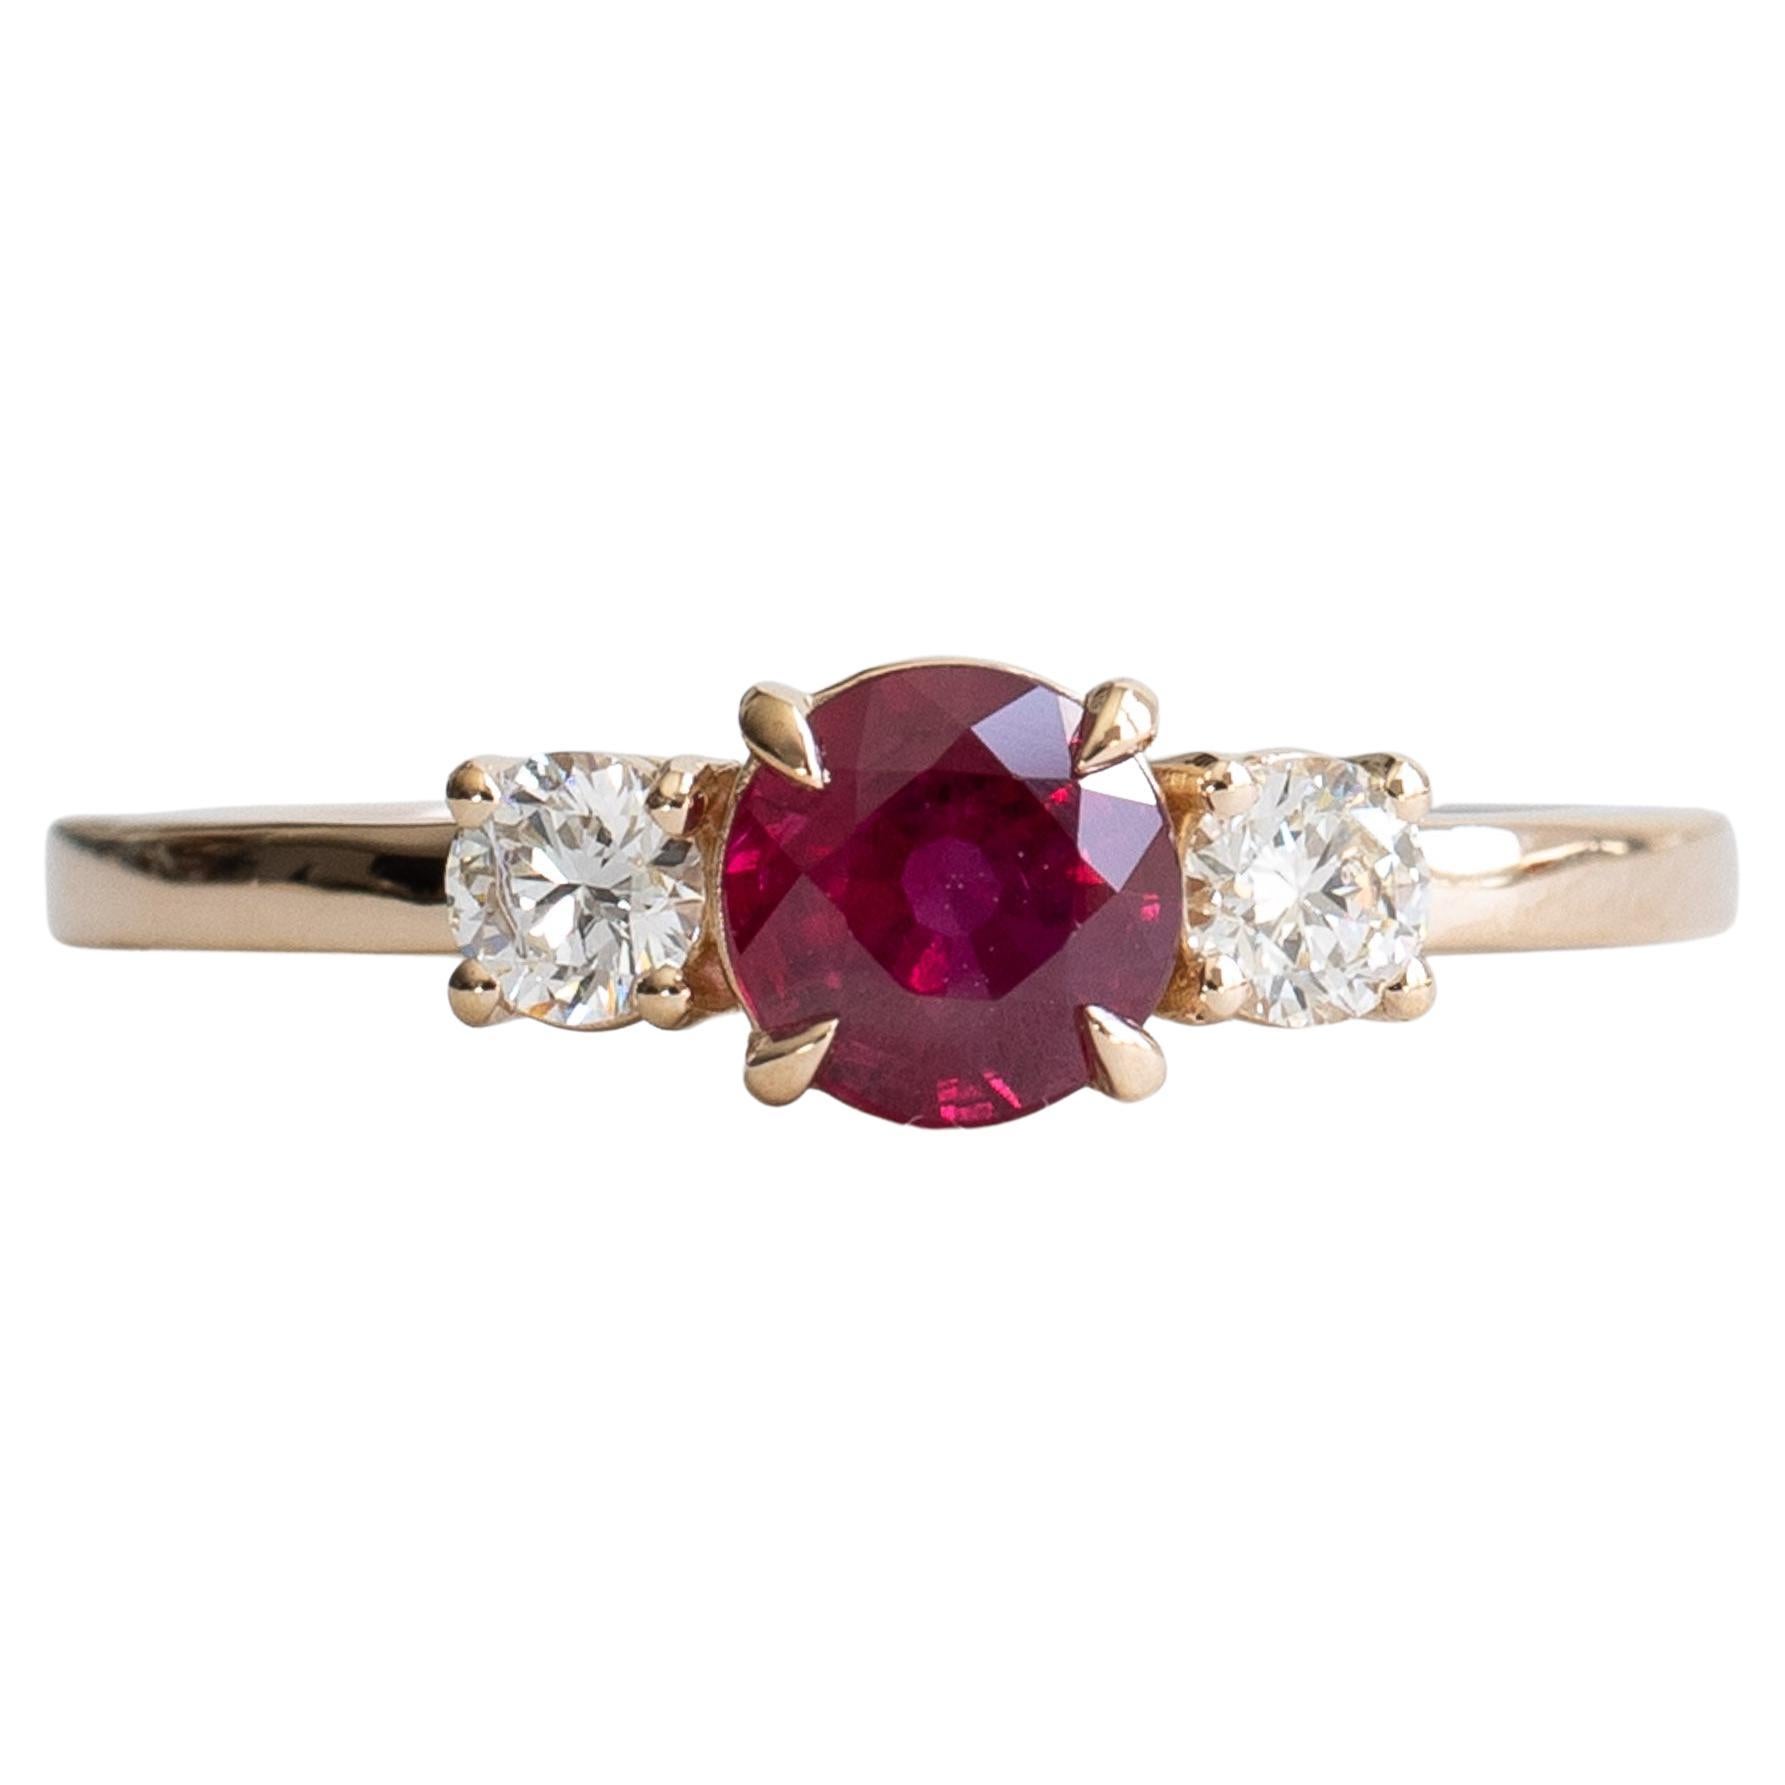 For Sale:  18K Three Stone Rudy Diamond Ring